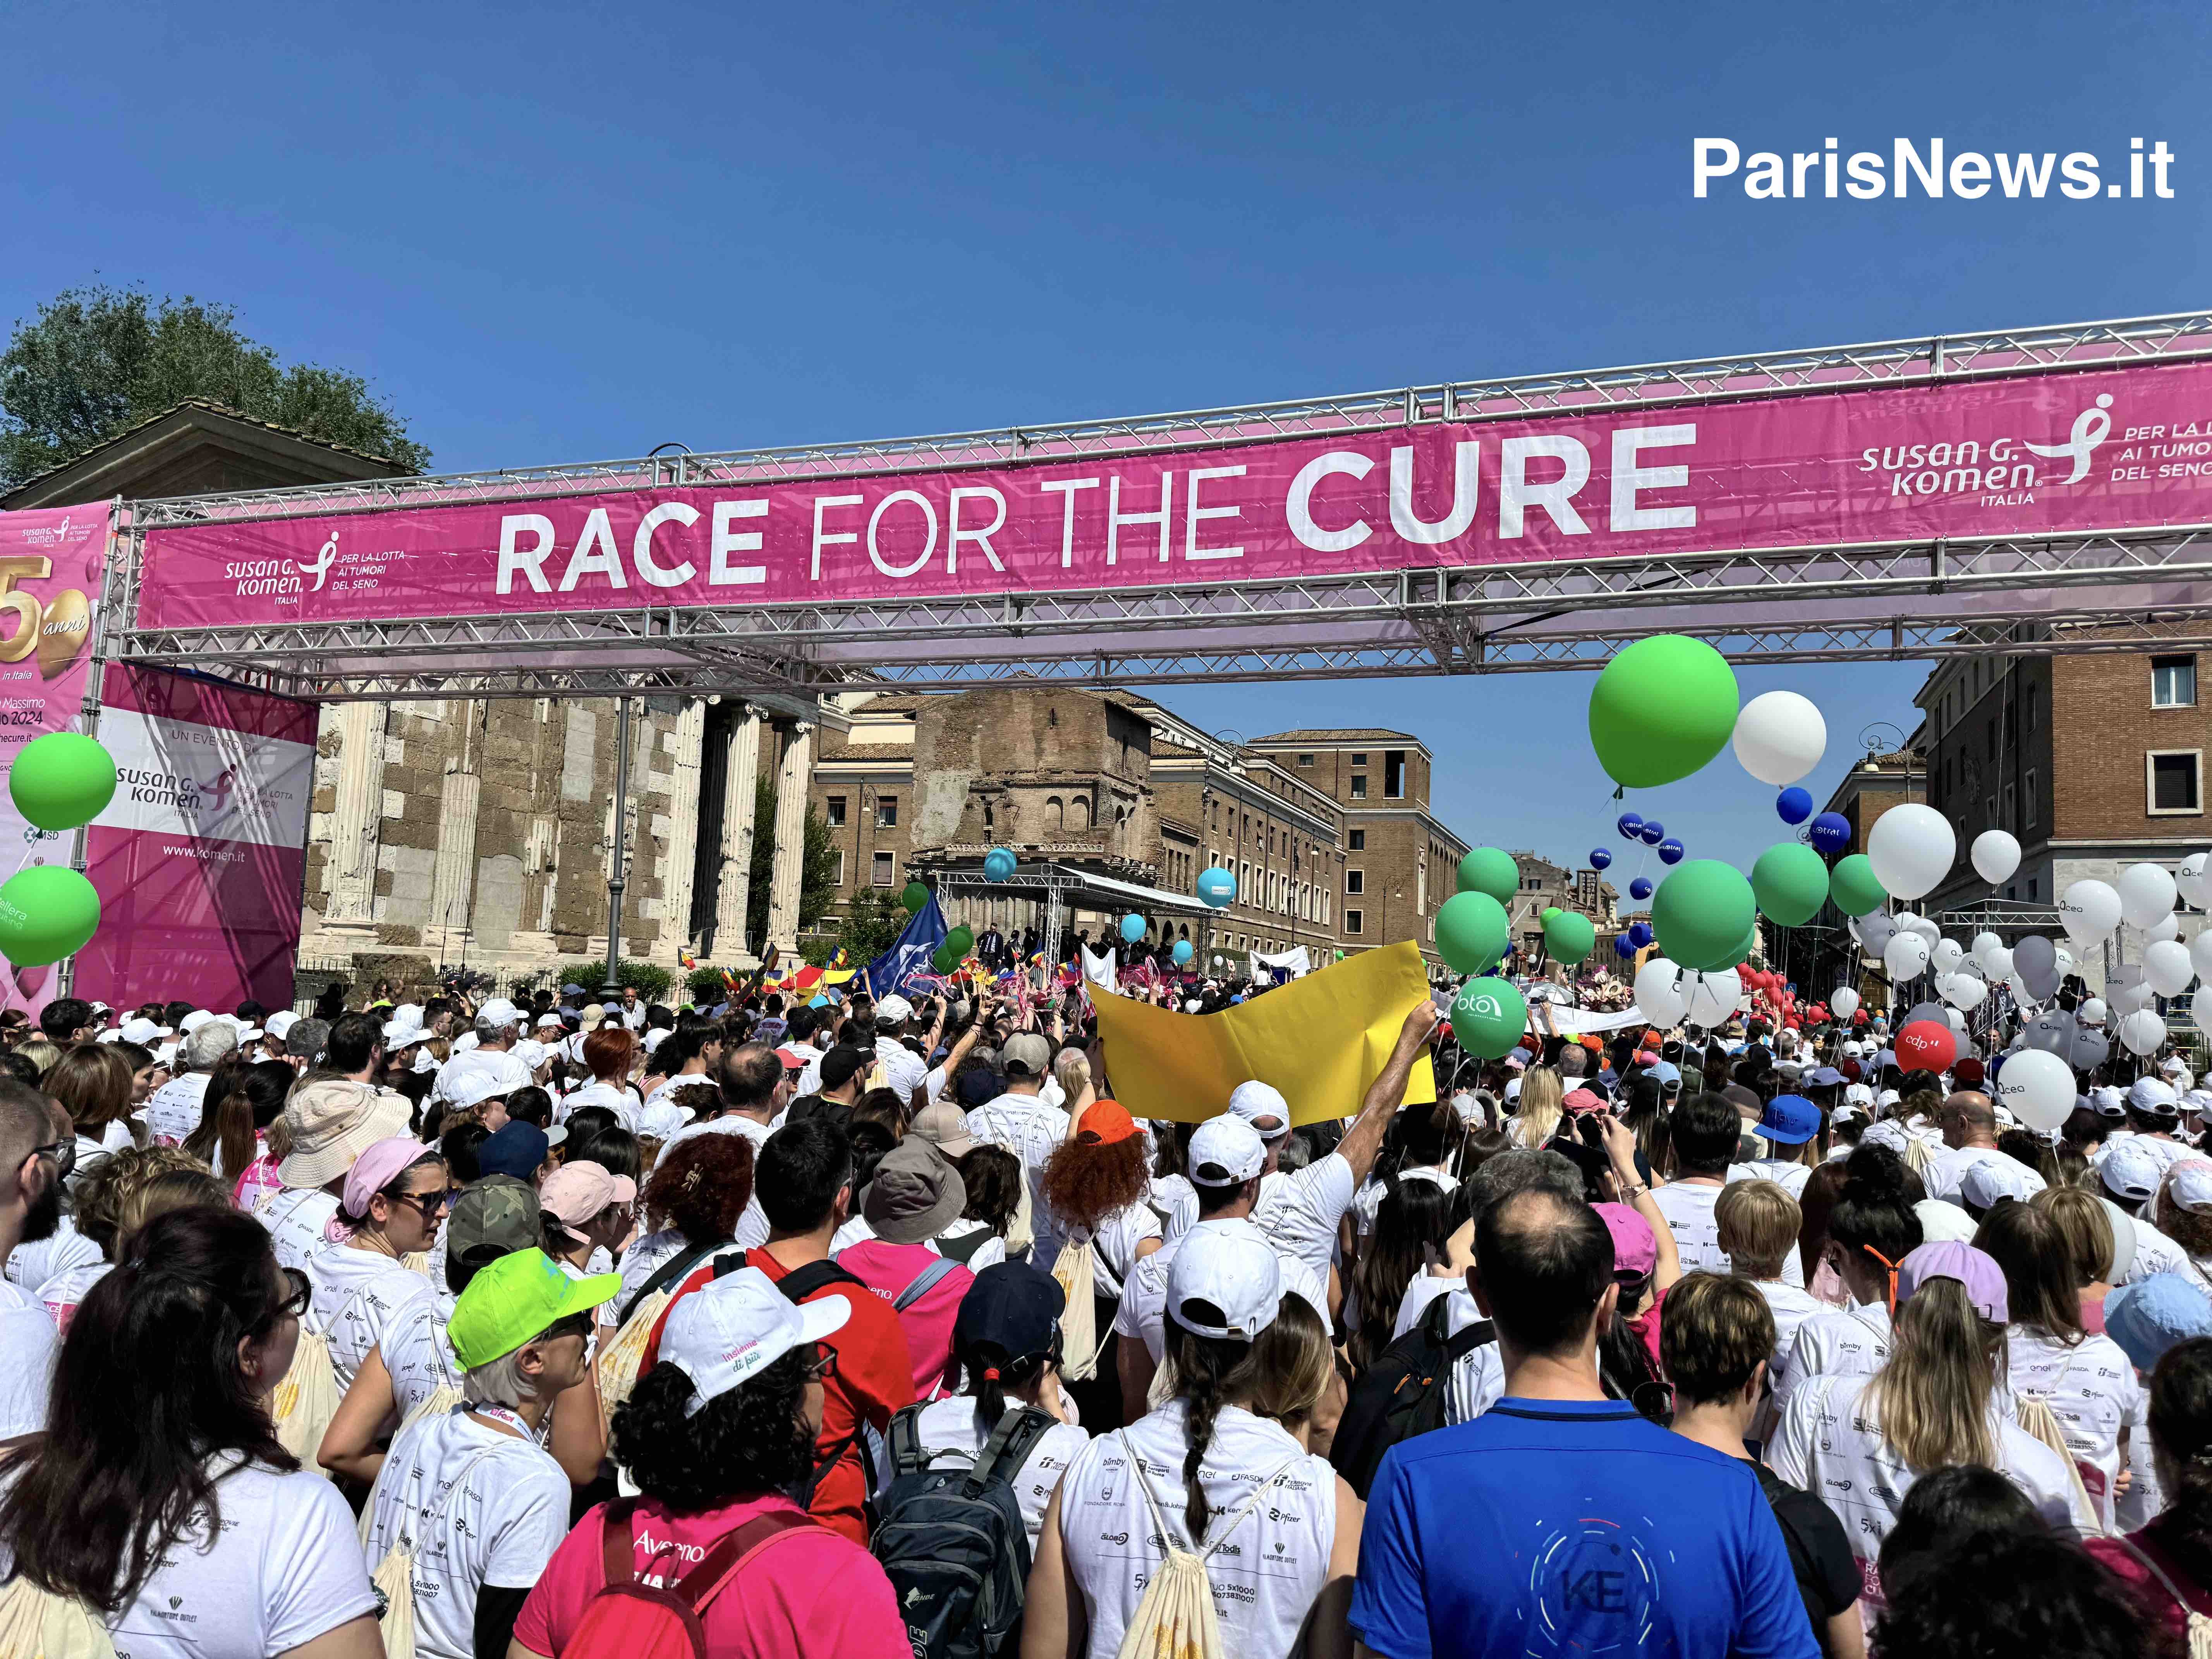 Race for the cure, e' record: 150mila presenze